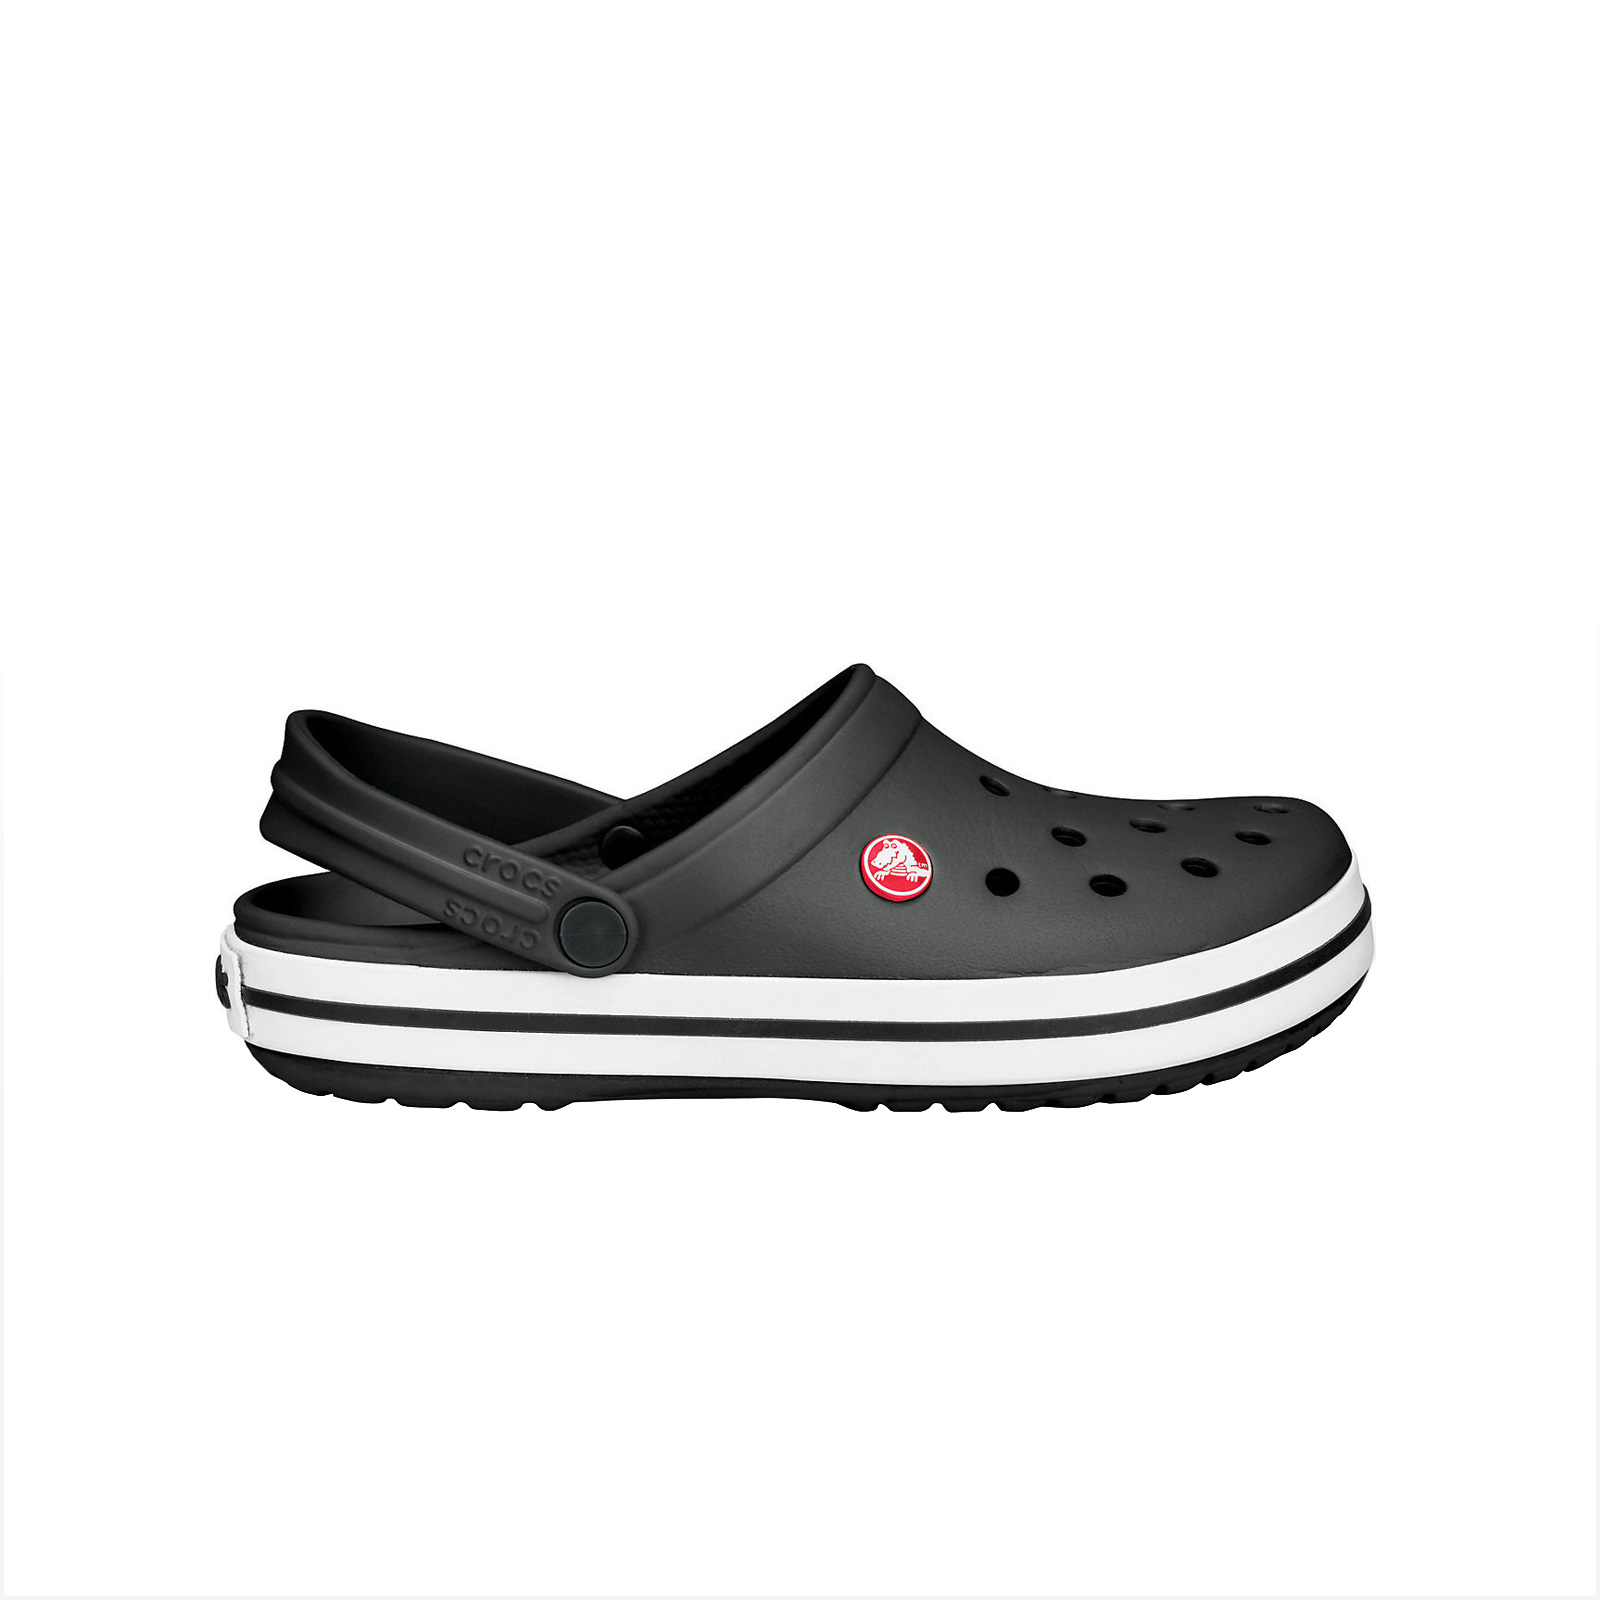 Crocs - CRΟCΒΑΝD - ΒLΑCΚ Ανδρικά > Παπούτσια > Clogs > Glogs